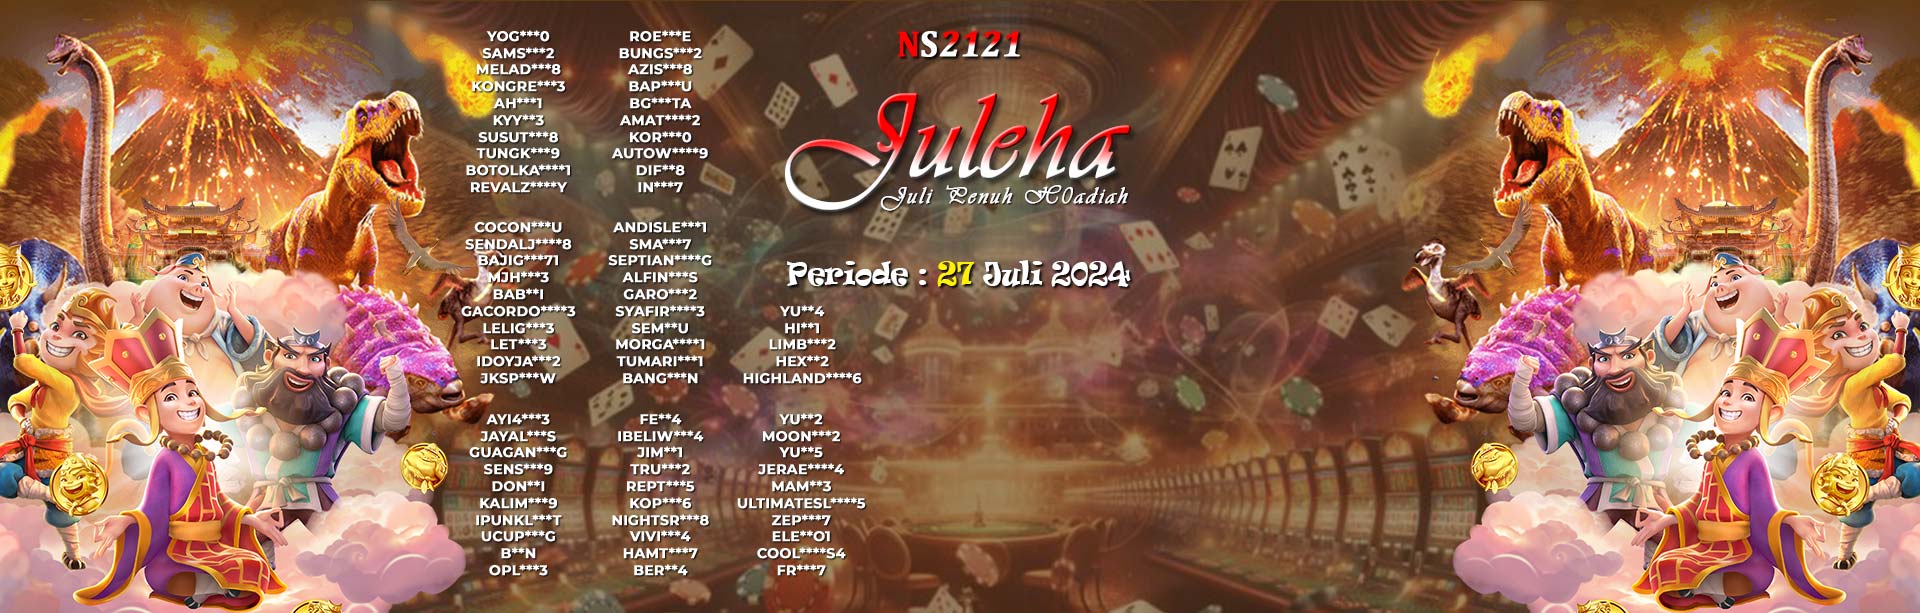 WINNER JULEHA NS2121